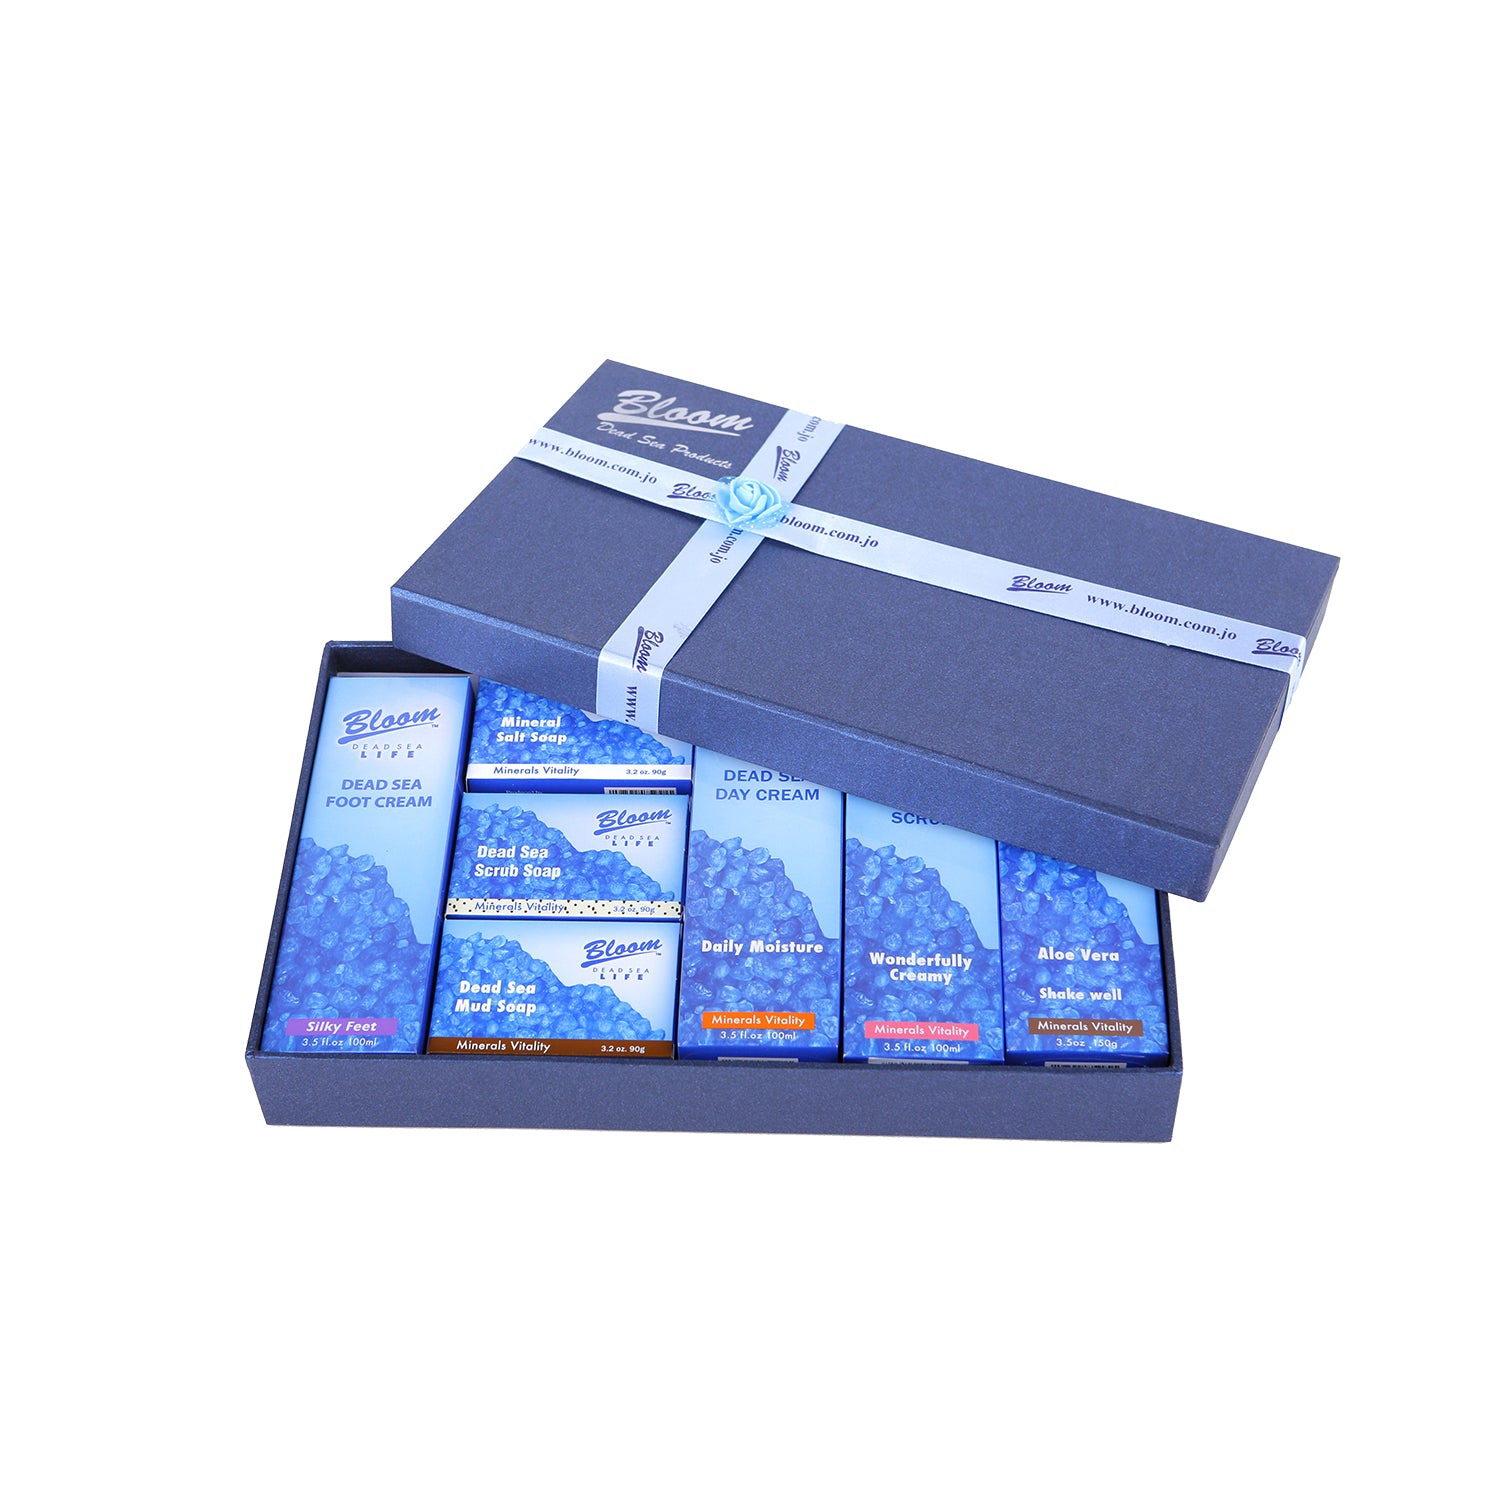 Dead Sea Gift Box Carton - Bloom 1